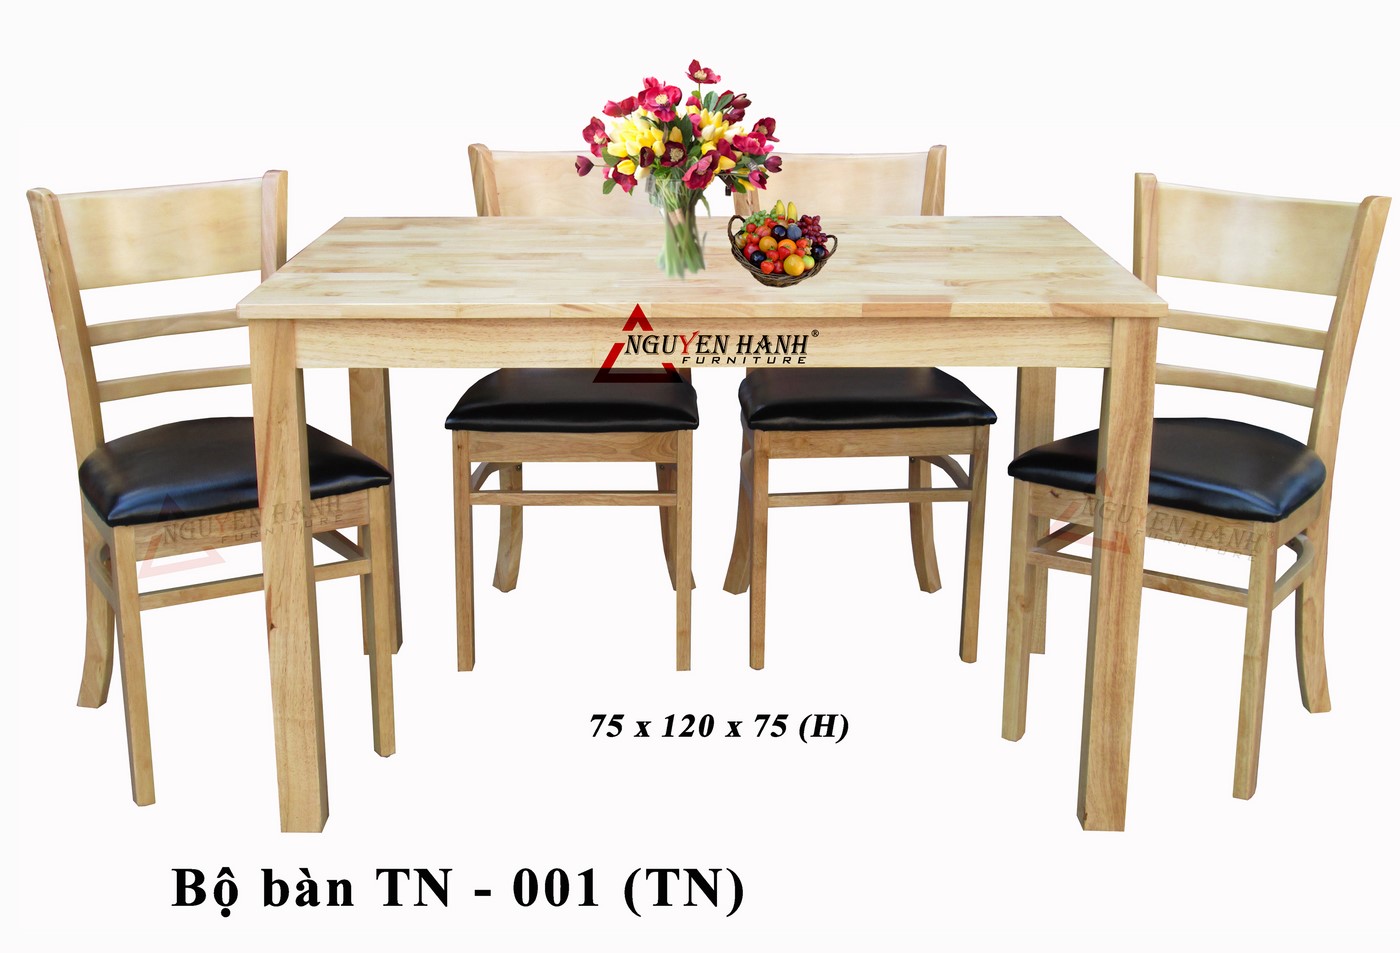 Name product: TN.001 (Natural) - Dimensions: 75 x 120 x 75cm - Description: Wood natural rubber